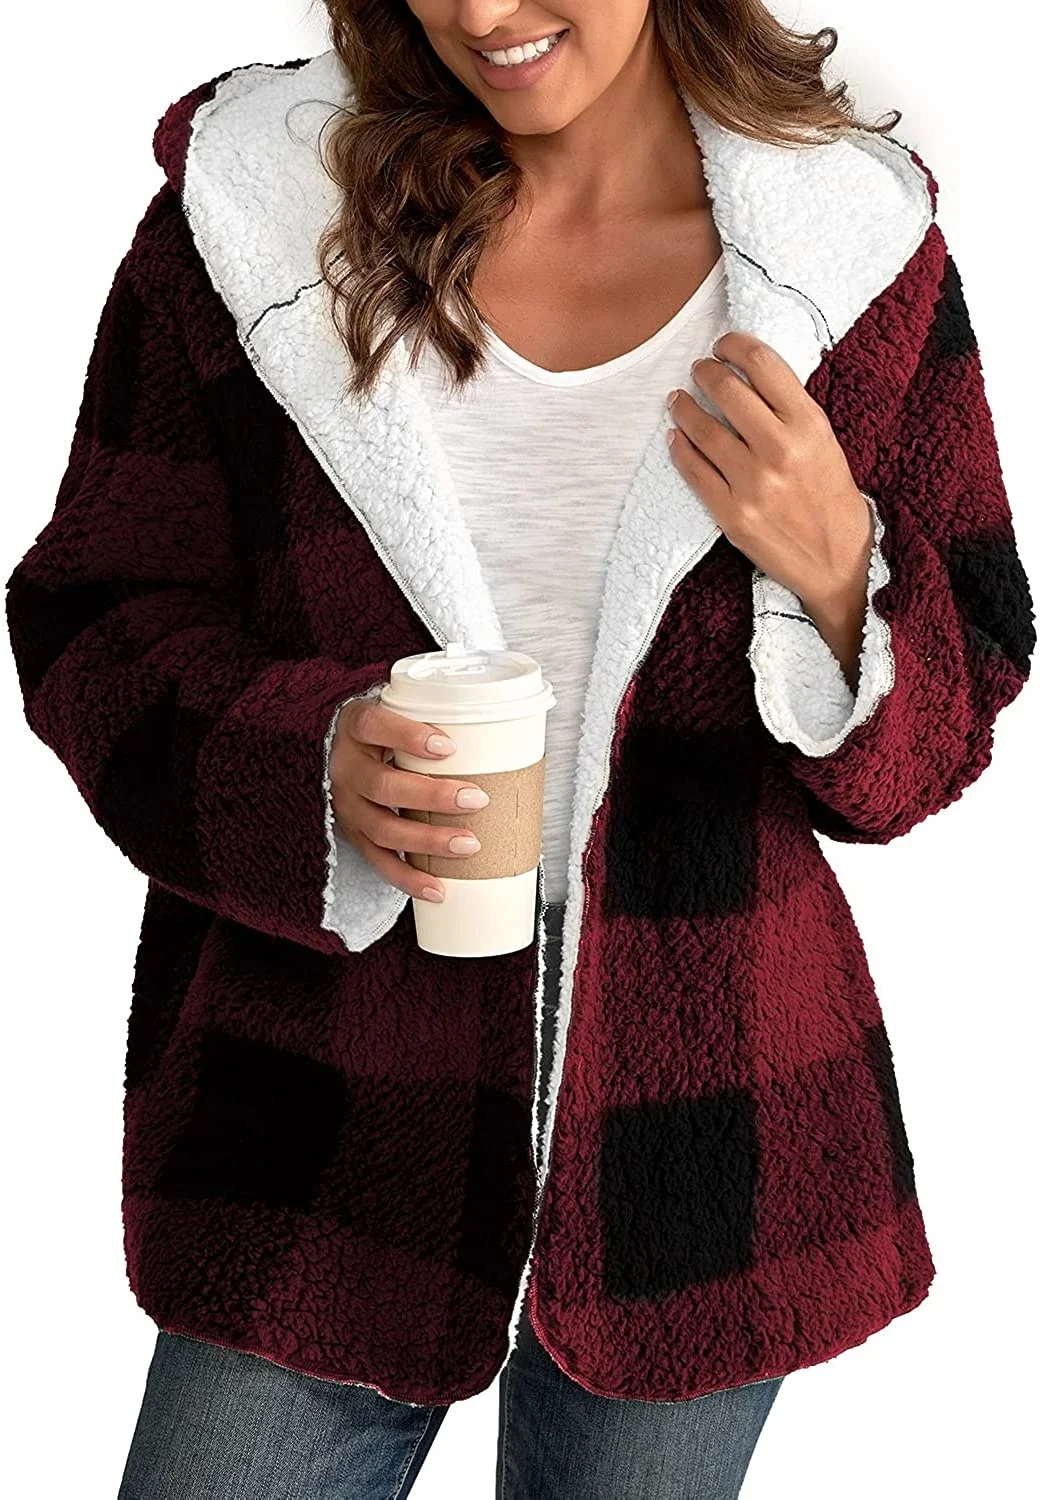 ReachMe Womens Oversized Zip Up Sherpa Jacket with Pockets Plaid Fleece Hoodie Winter Teddy Coat Outerwear